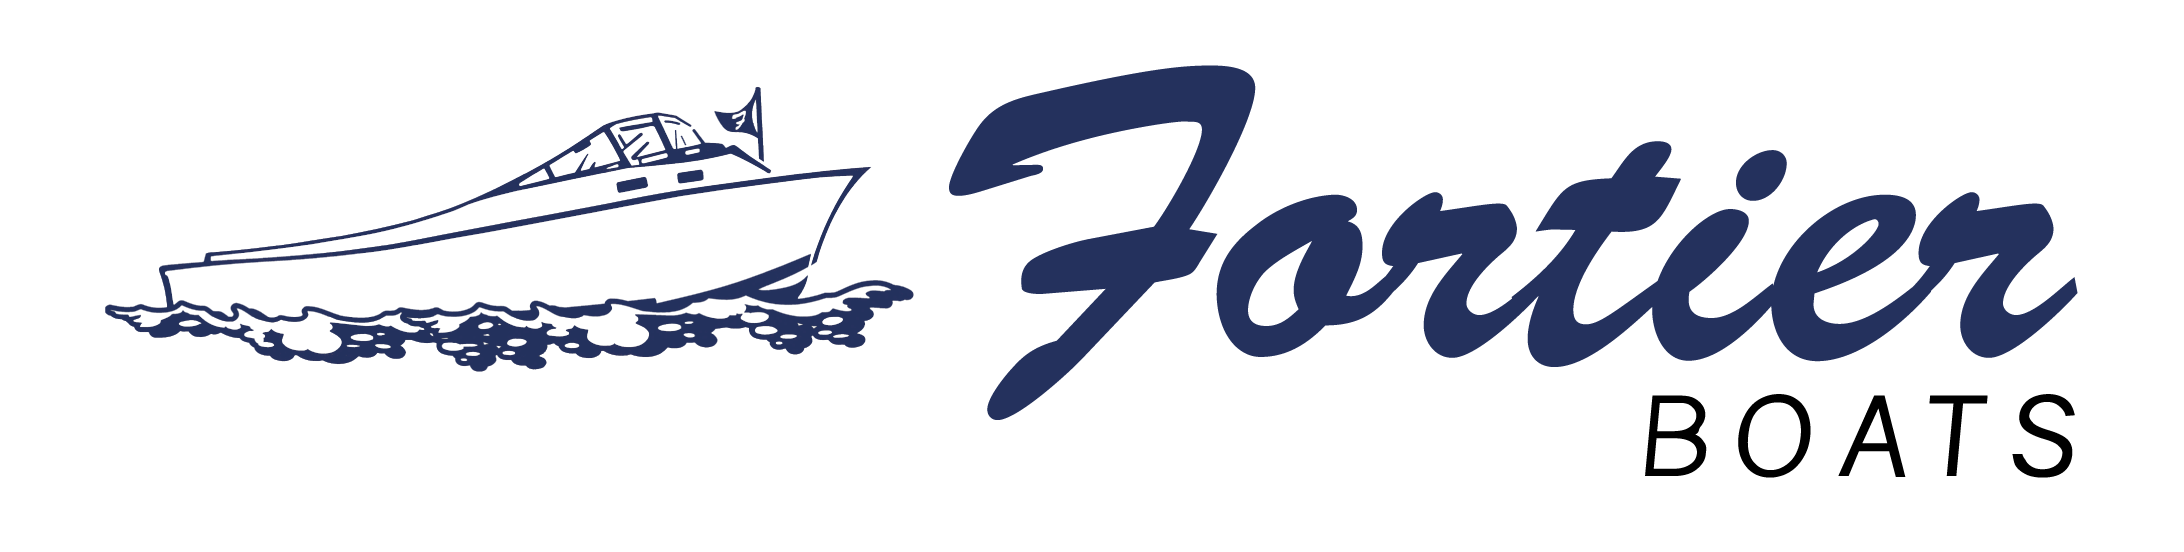 Fortier logo